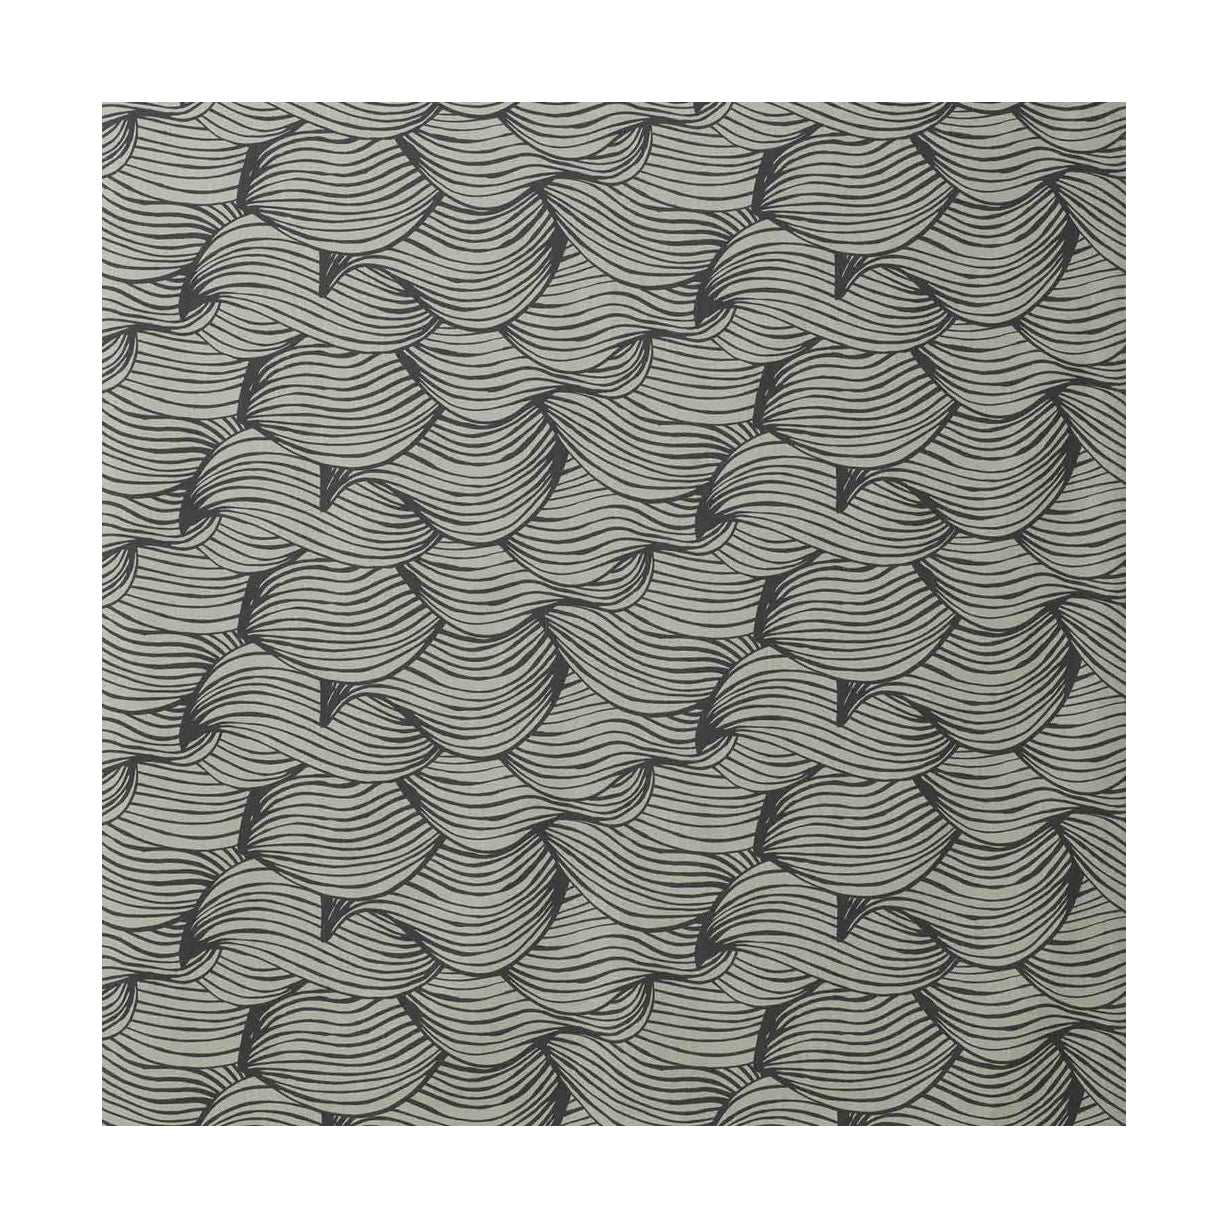 Spira Wave CTC -tyg med akrylbredd 145 cm (pris per meter), grå